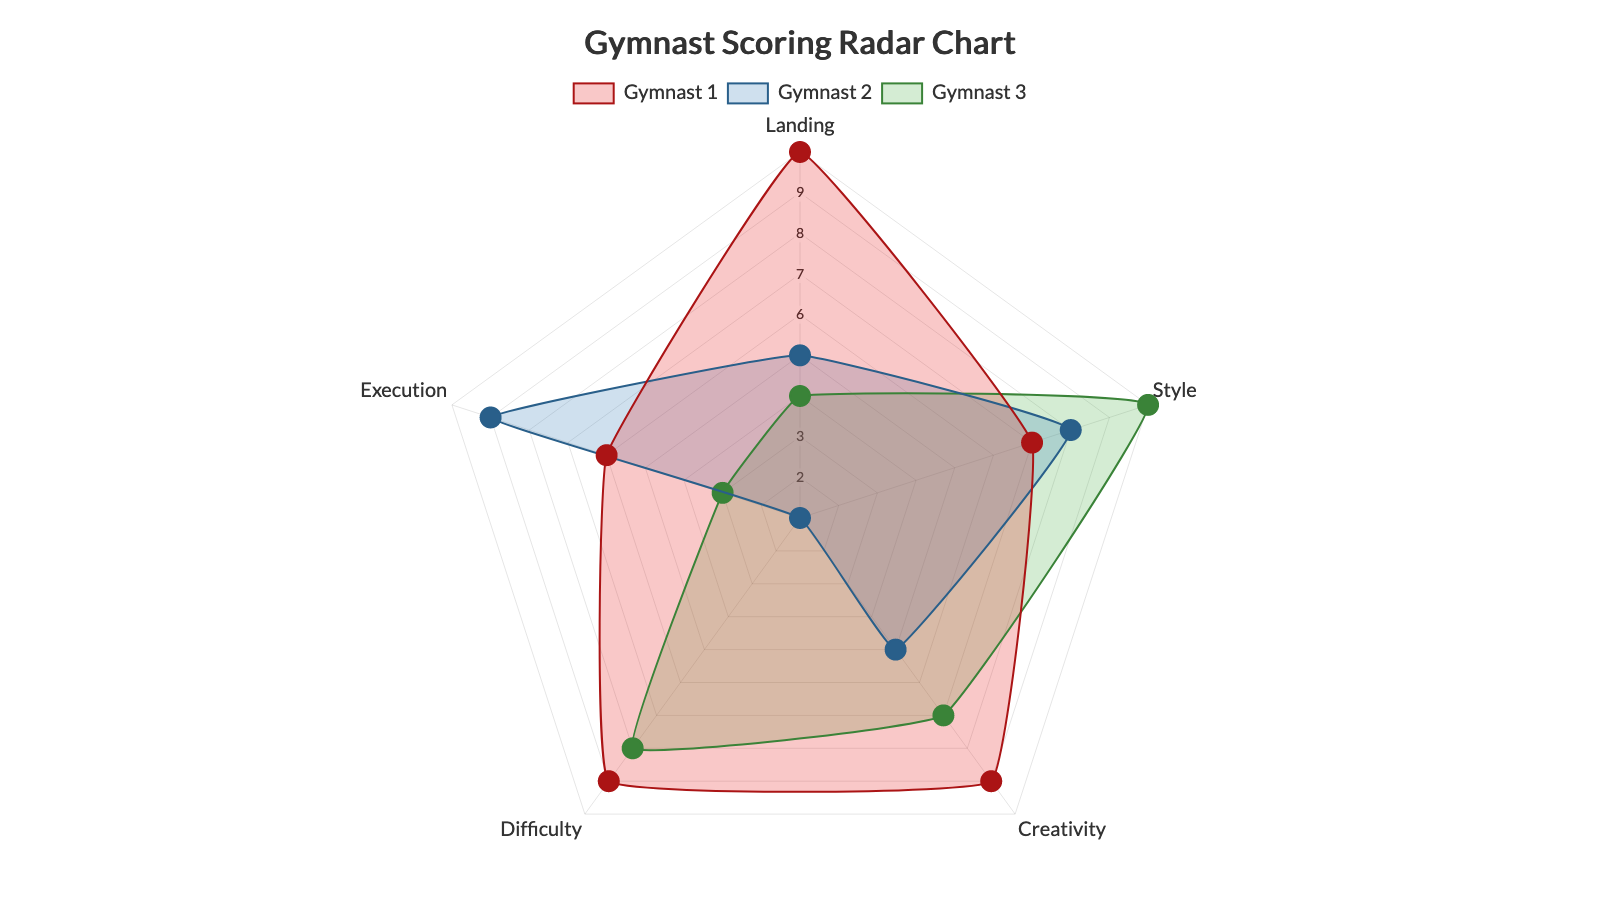 Radar - Gymnast Scoring Radar Chart